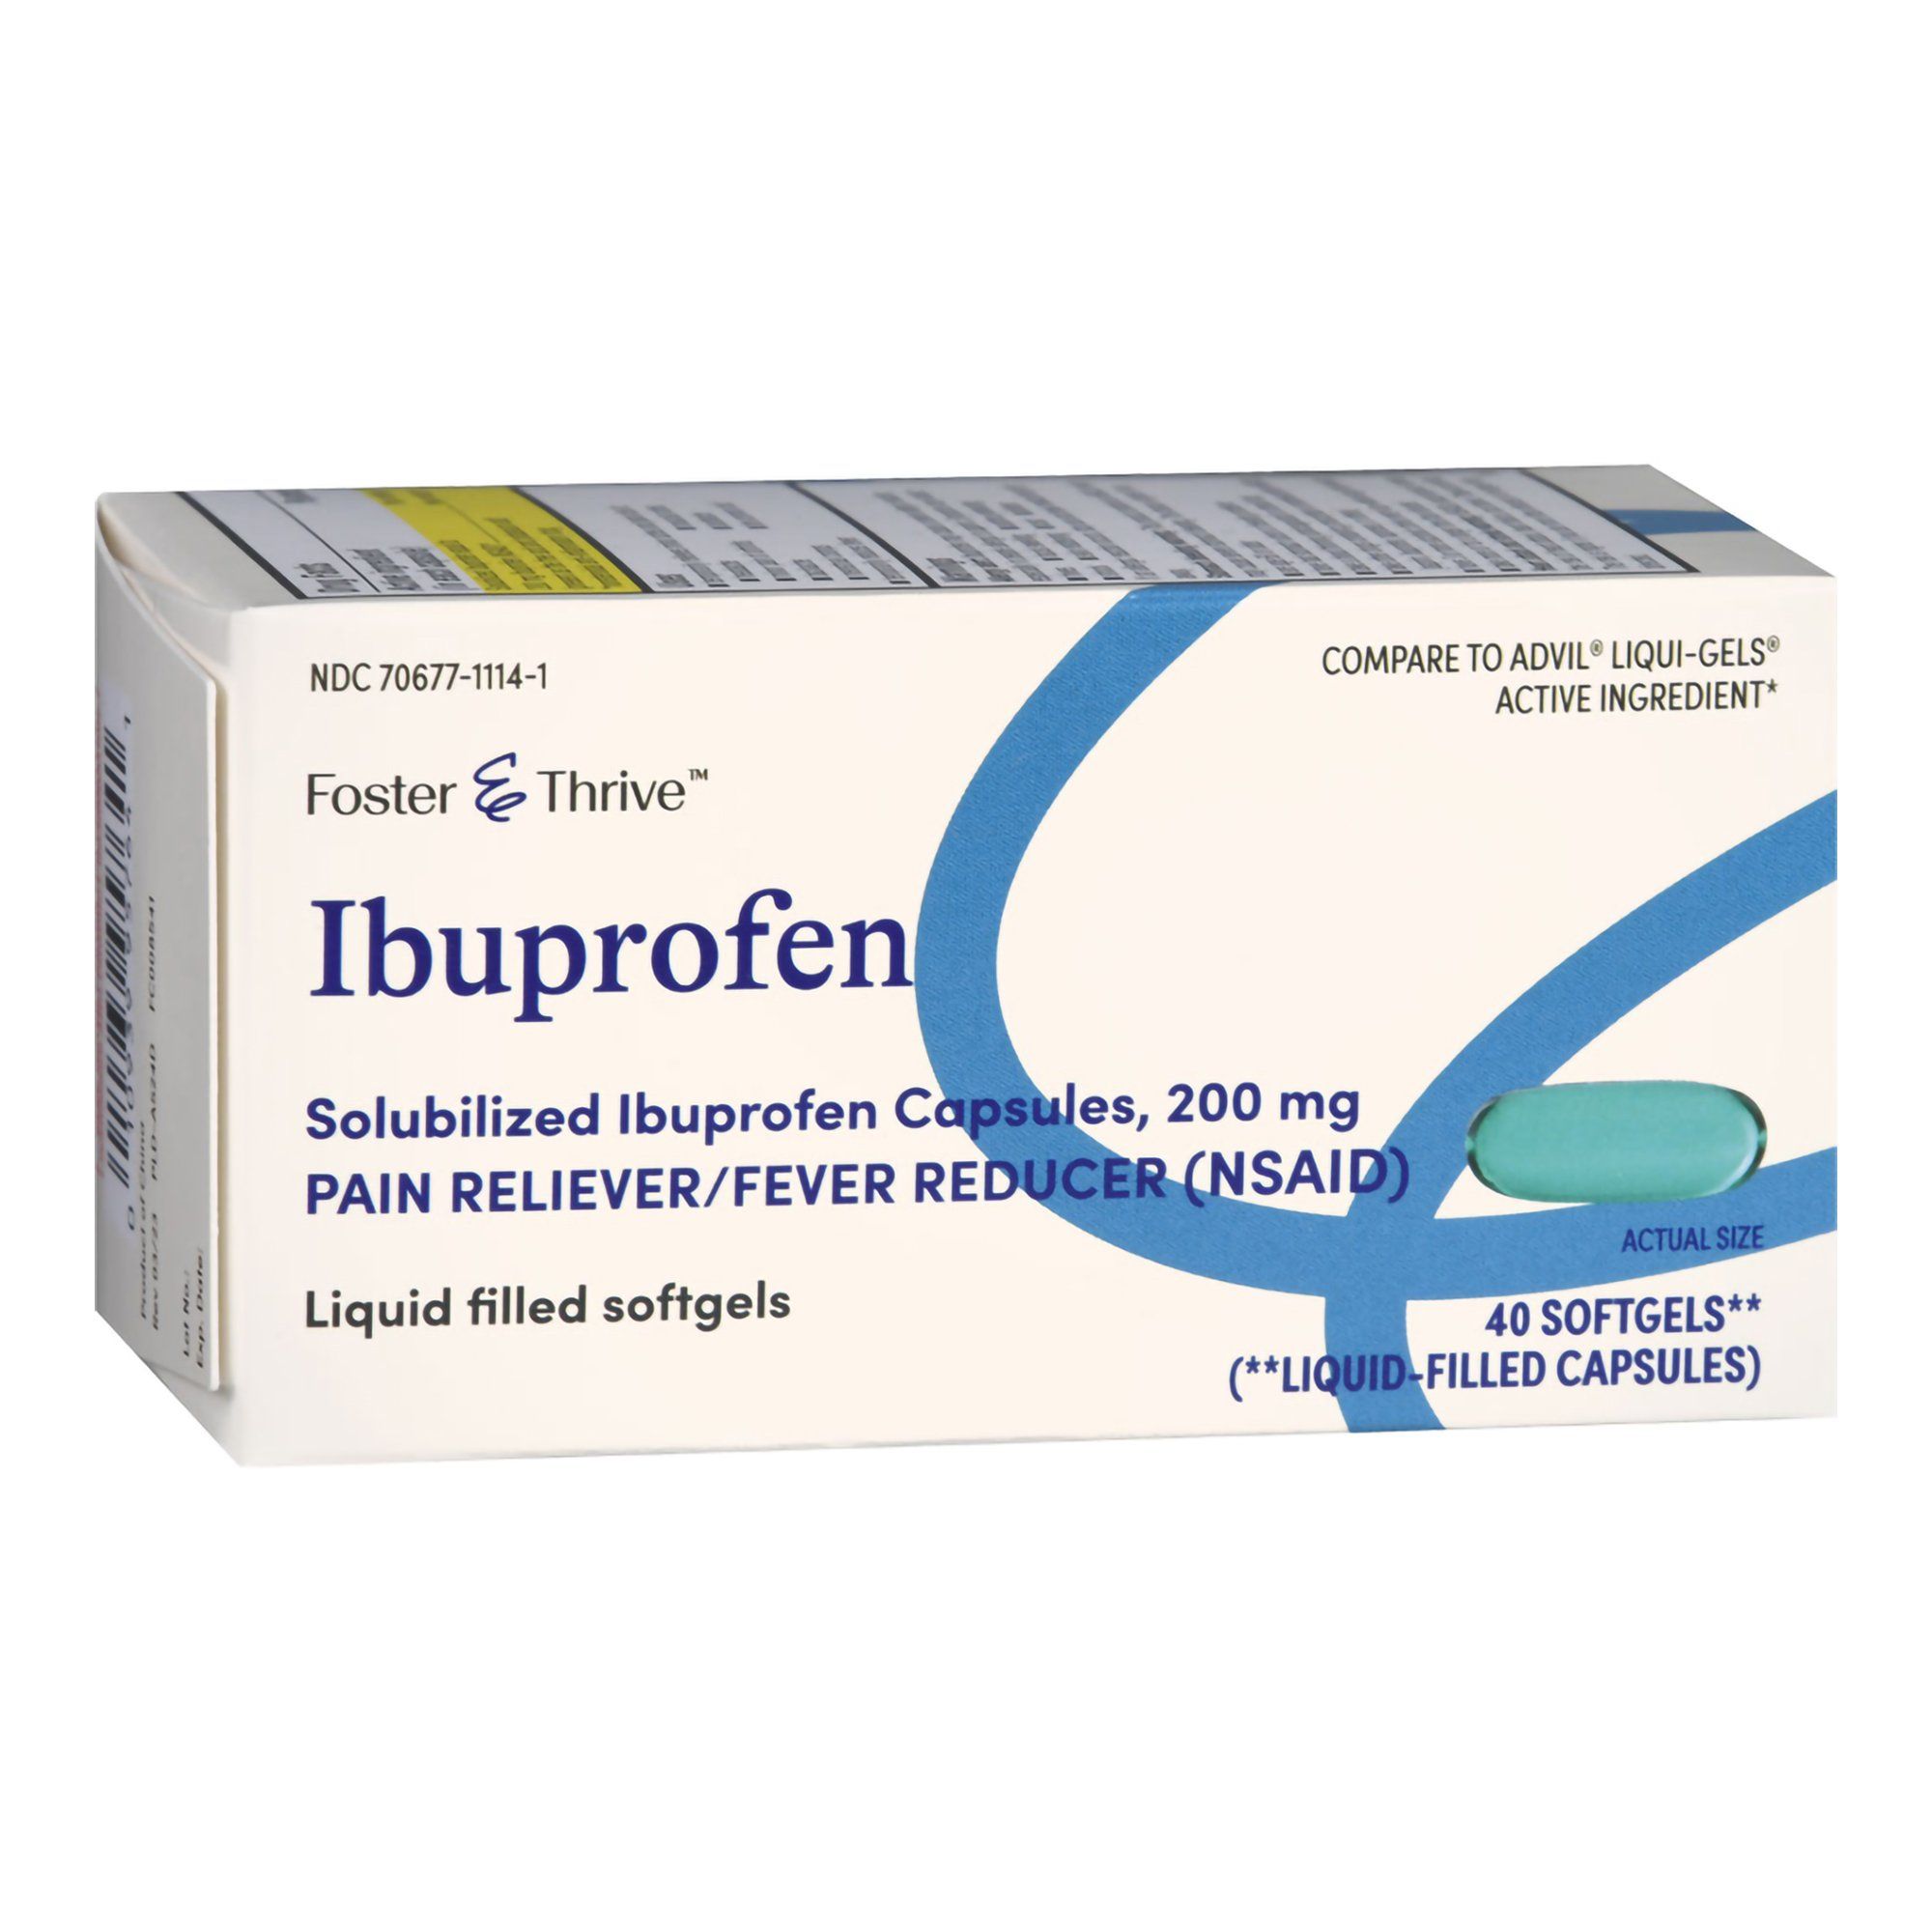 Foster & Thrive Ibuprofen Softgels, 200 mg - 40 ct